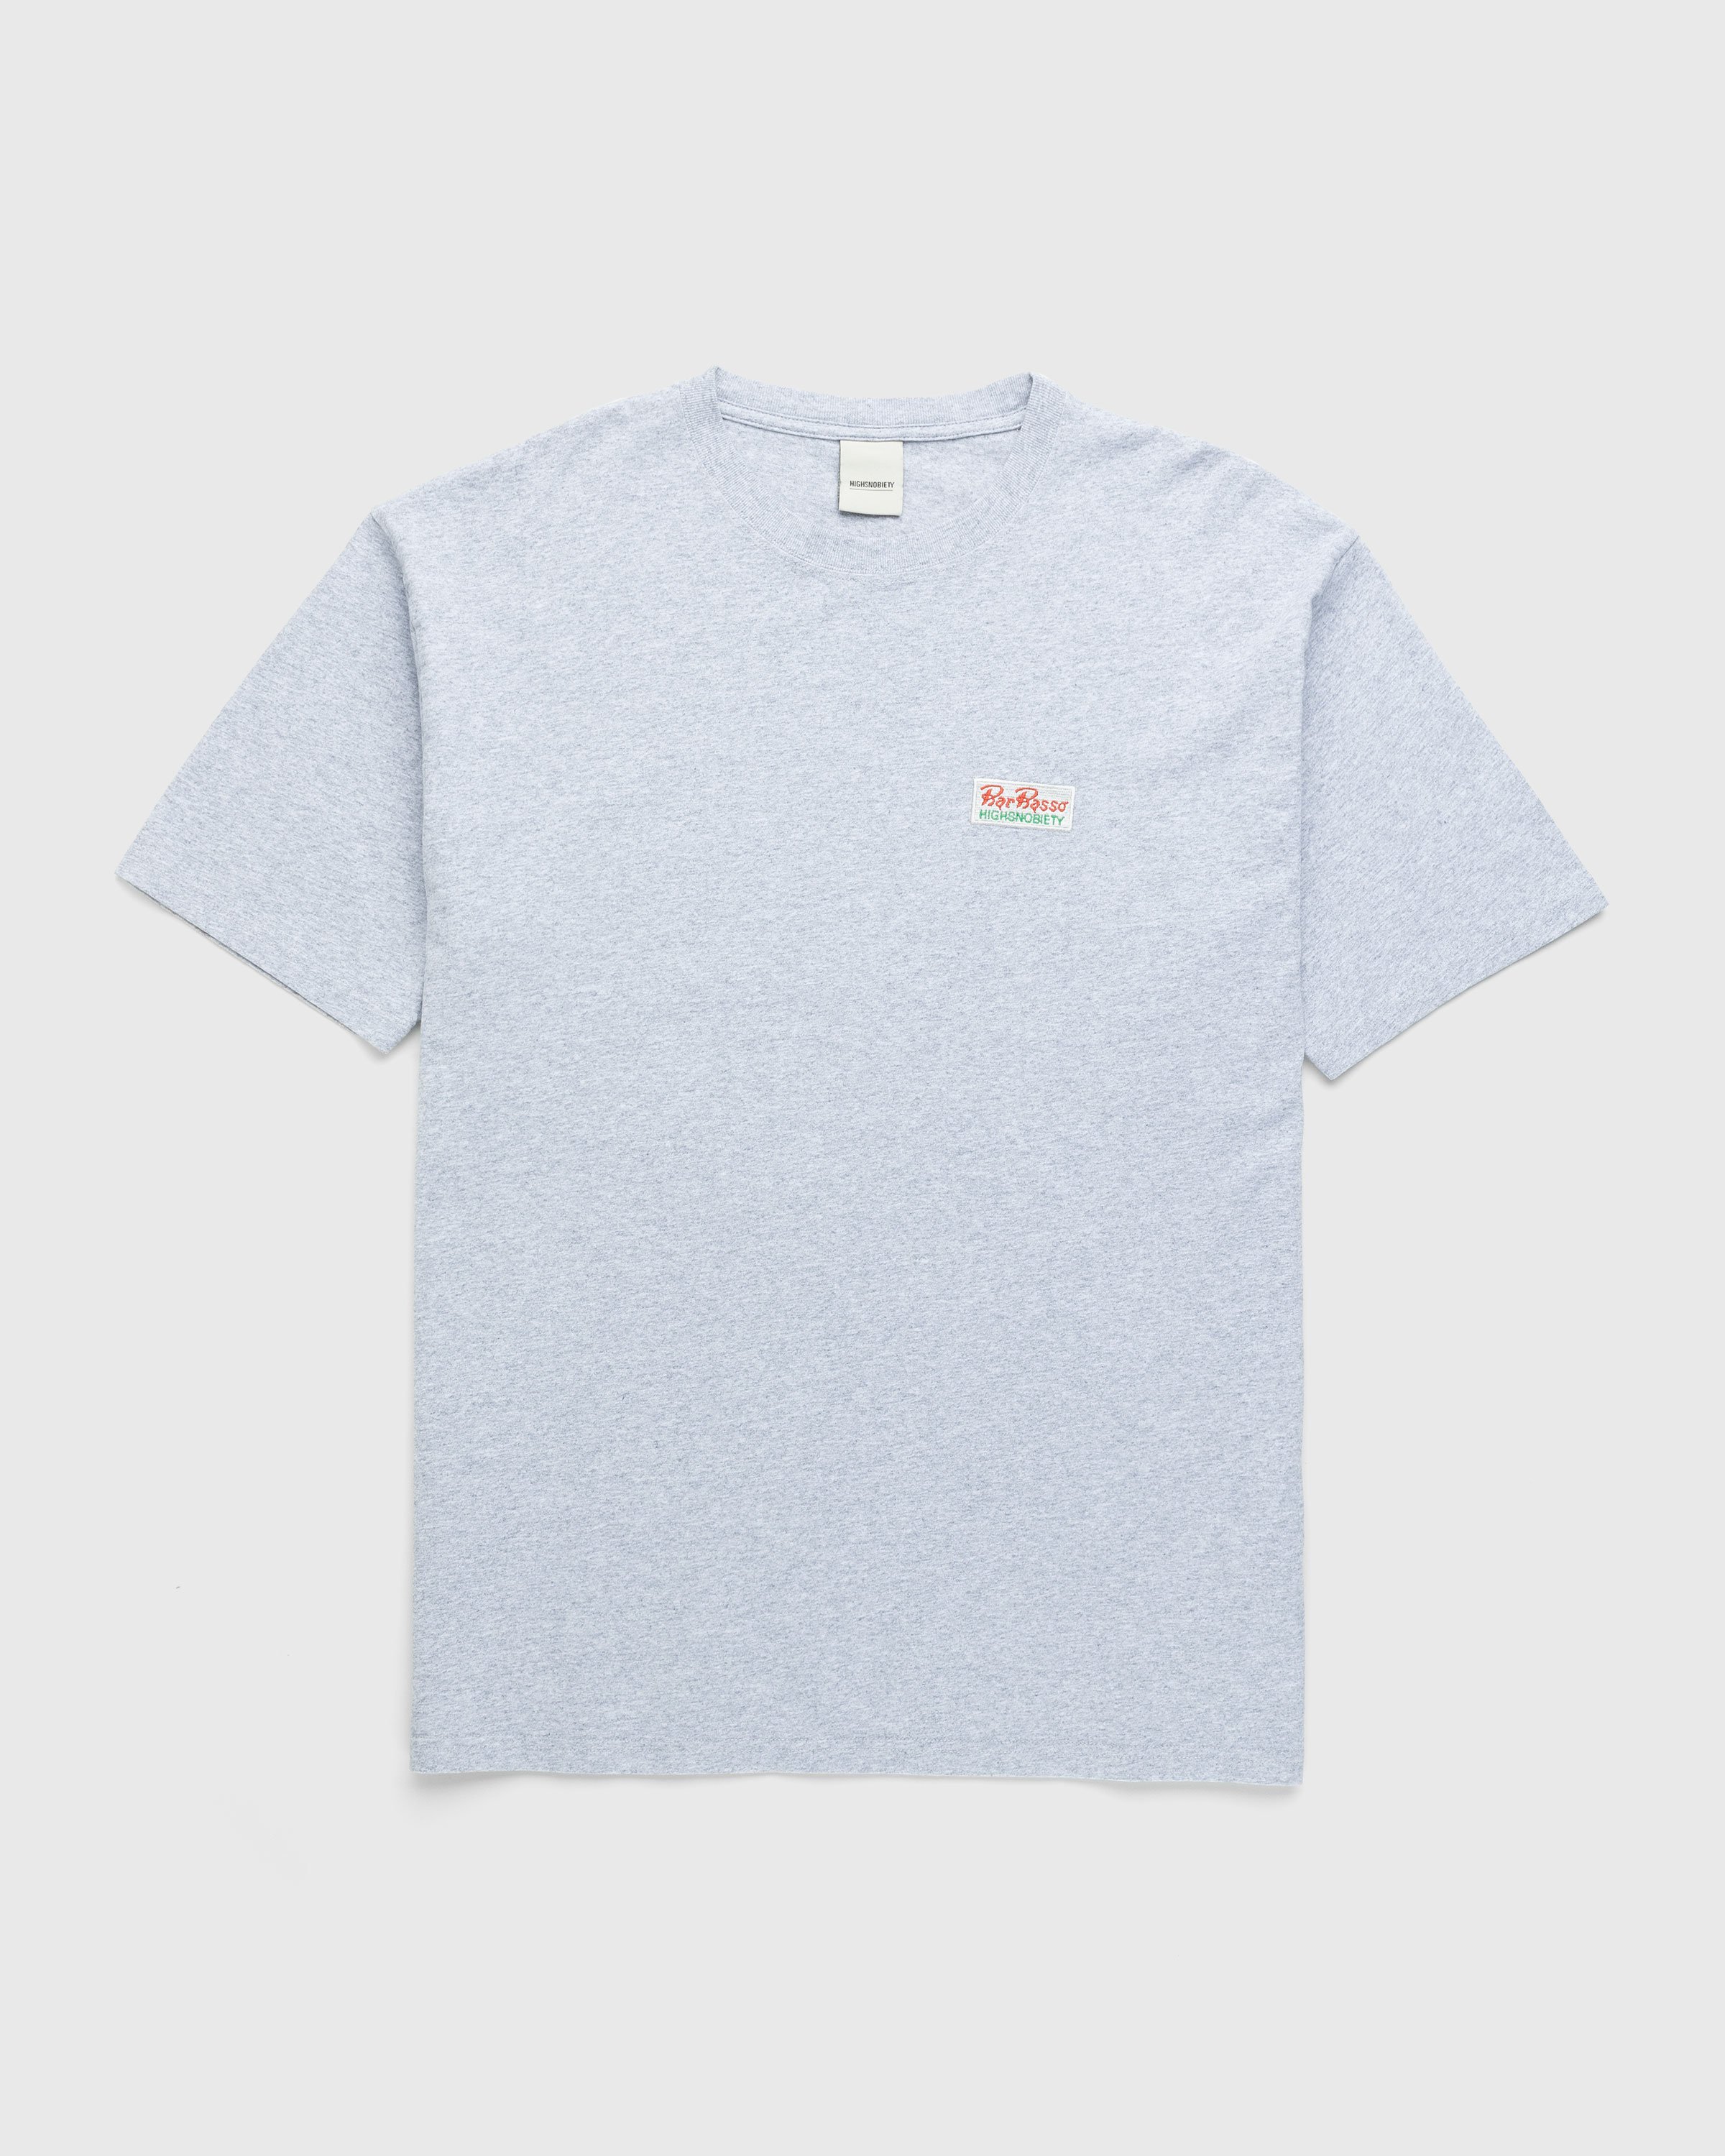 Bar Basso x Highsnobiety - Graphic T-Shirt Grey - Clothing - Grey - Image 2